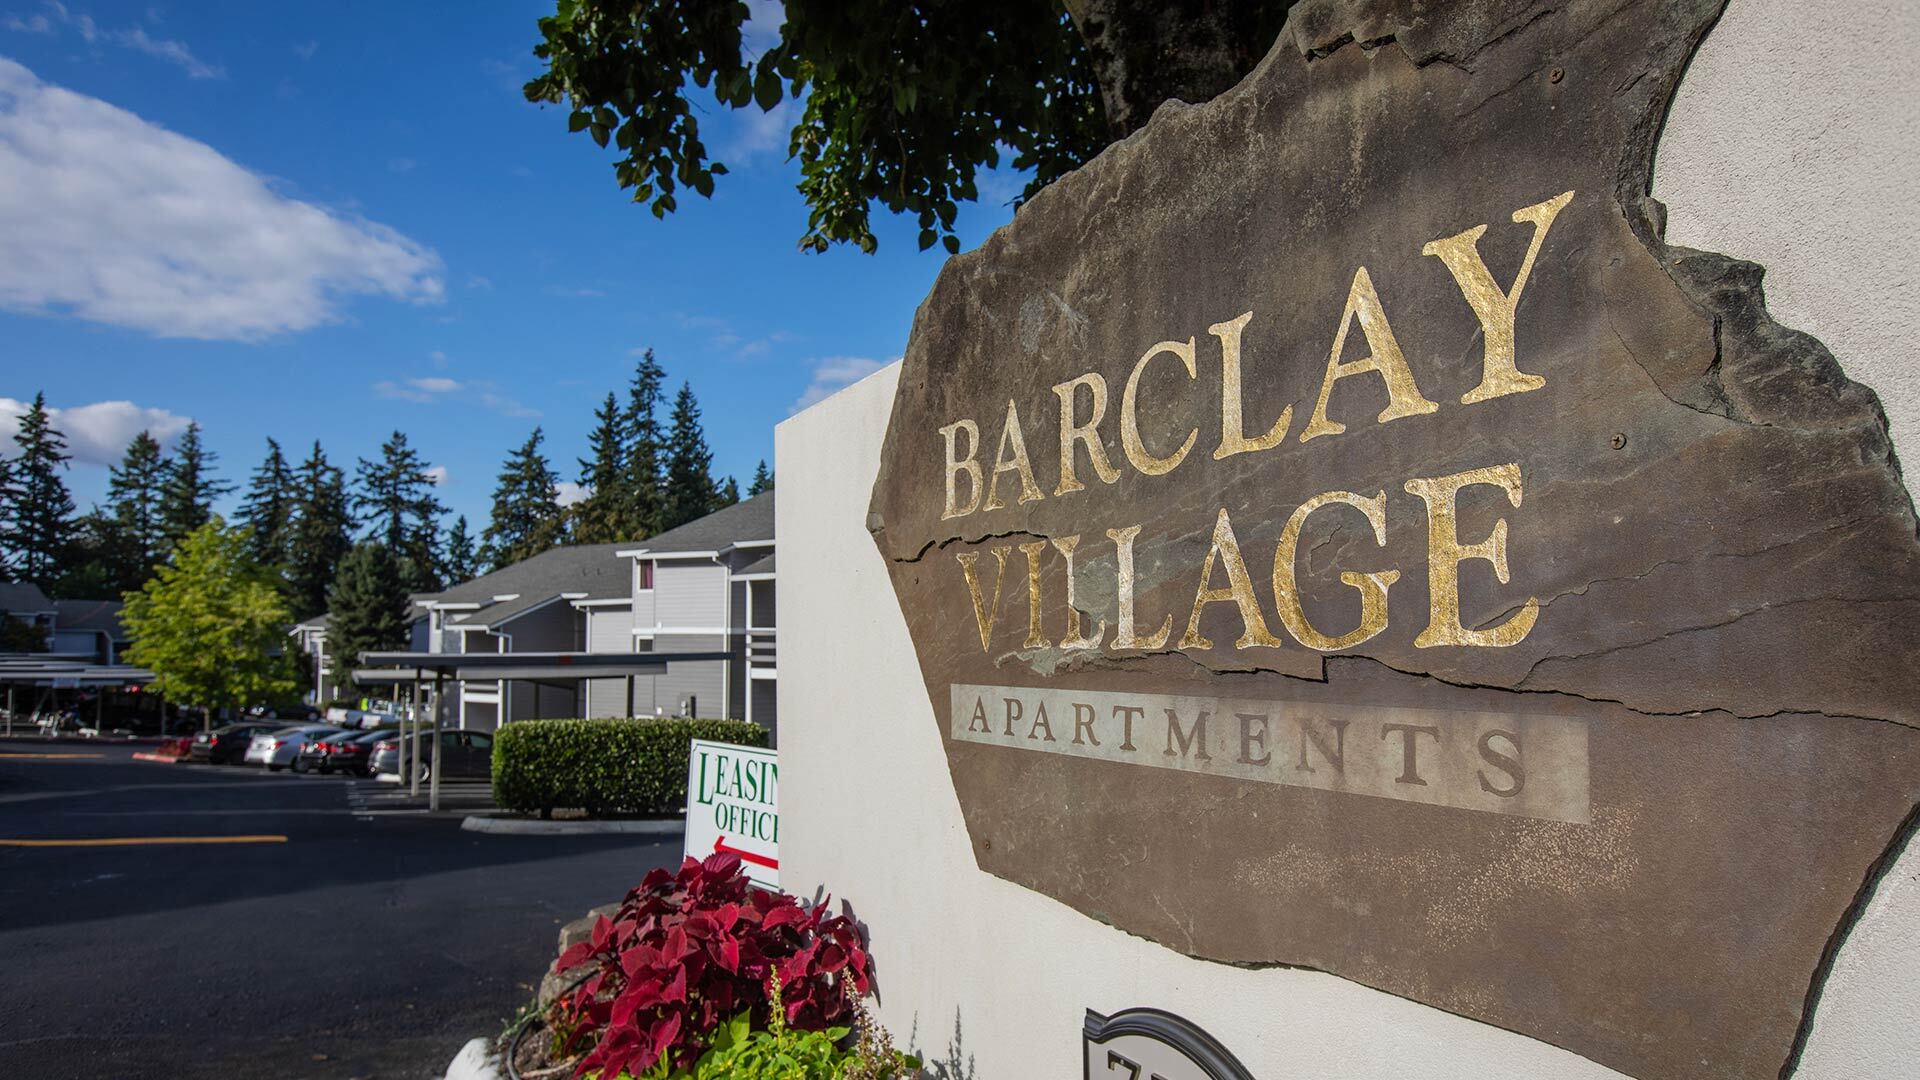 Barclay village sign